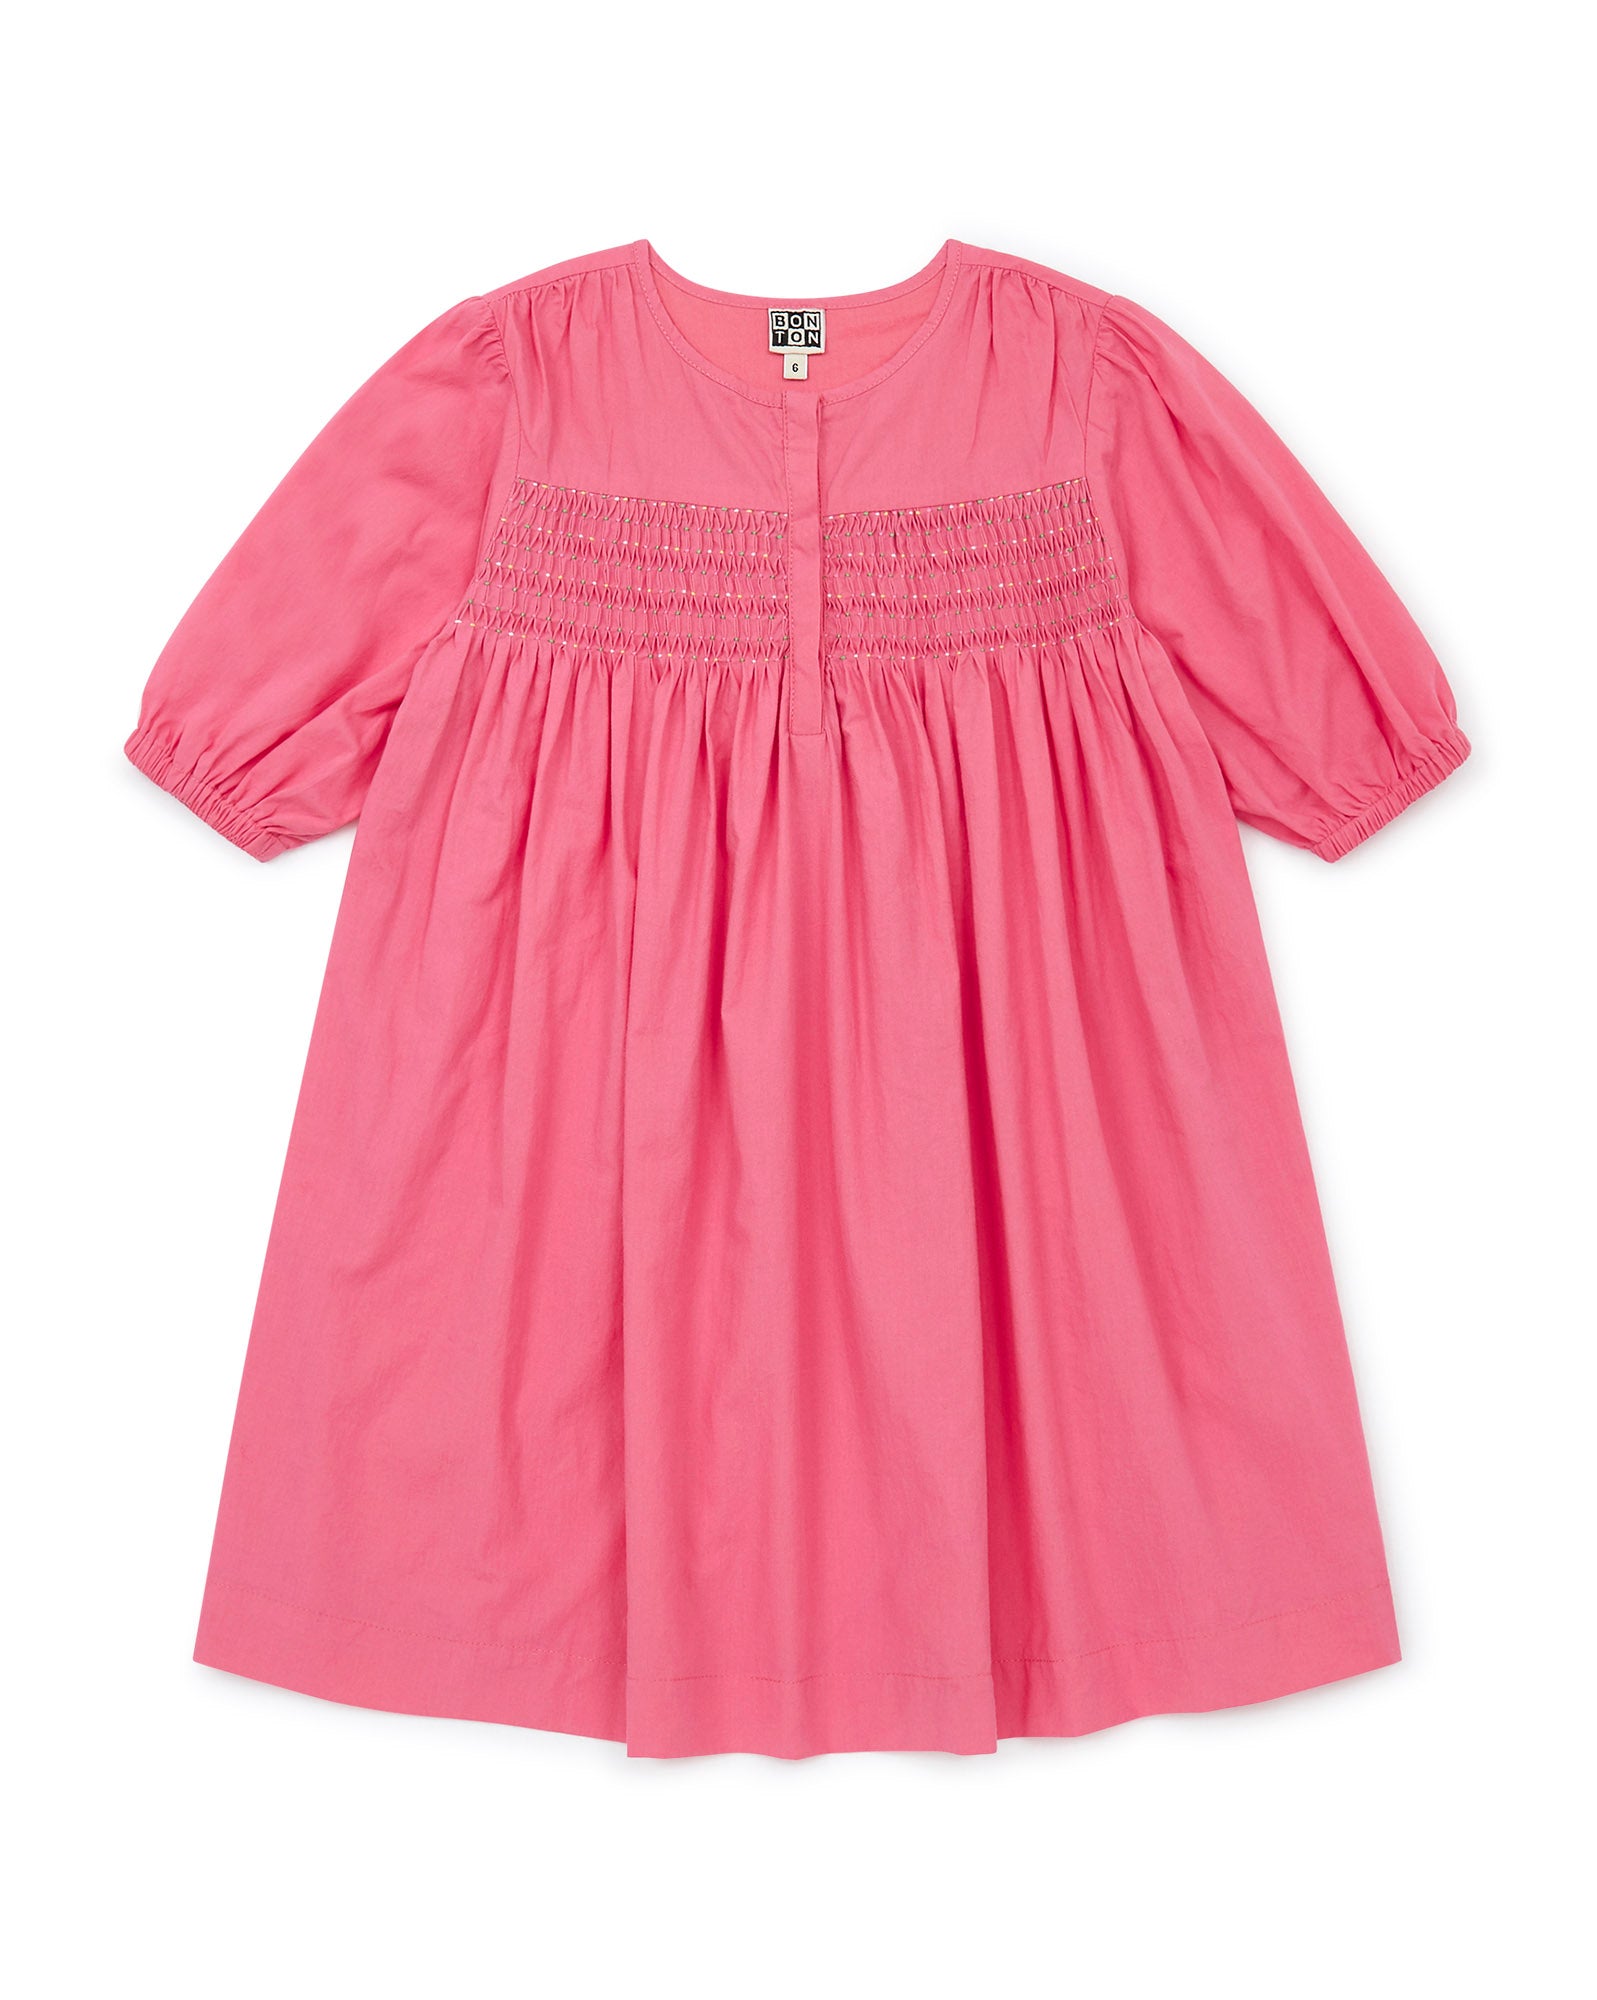 Girls Bright Pink Cotton Dress